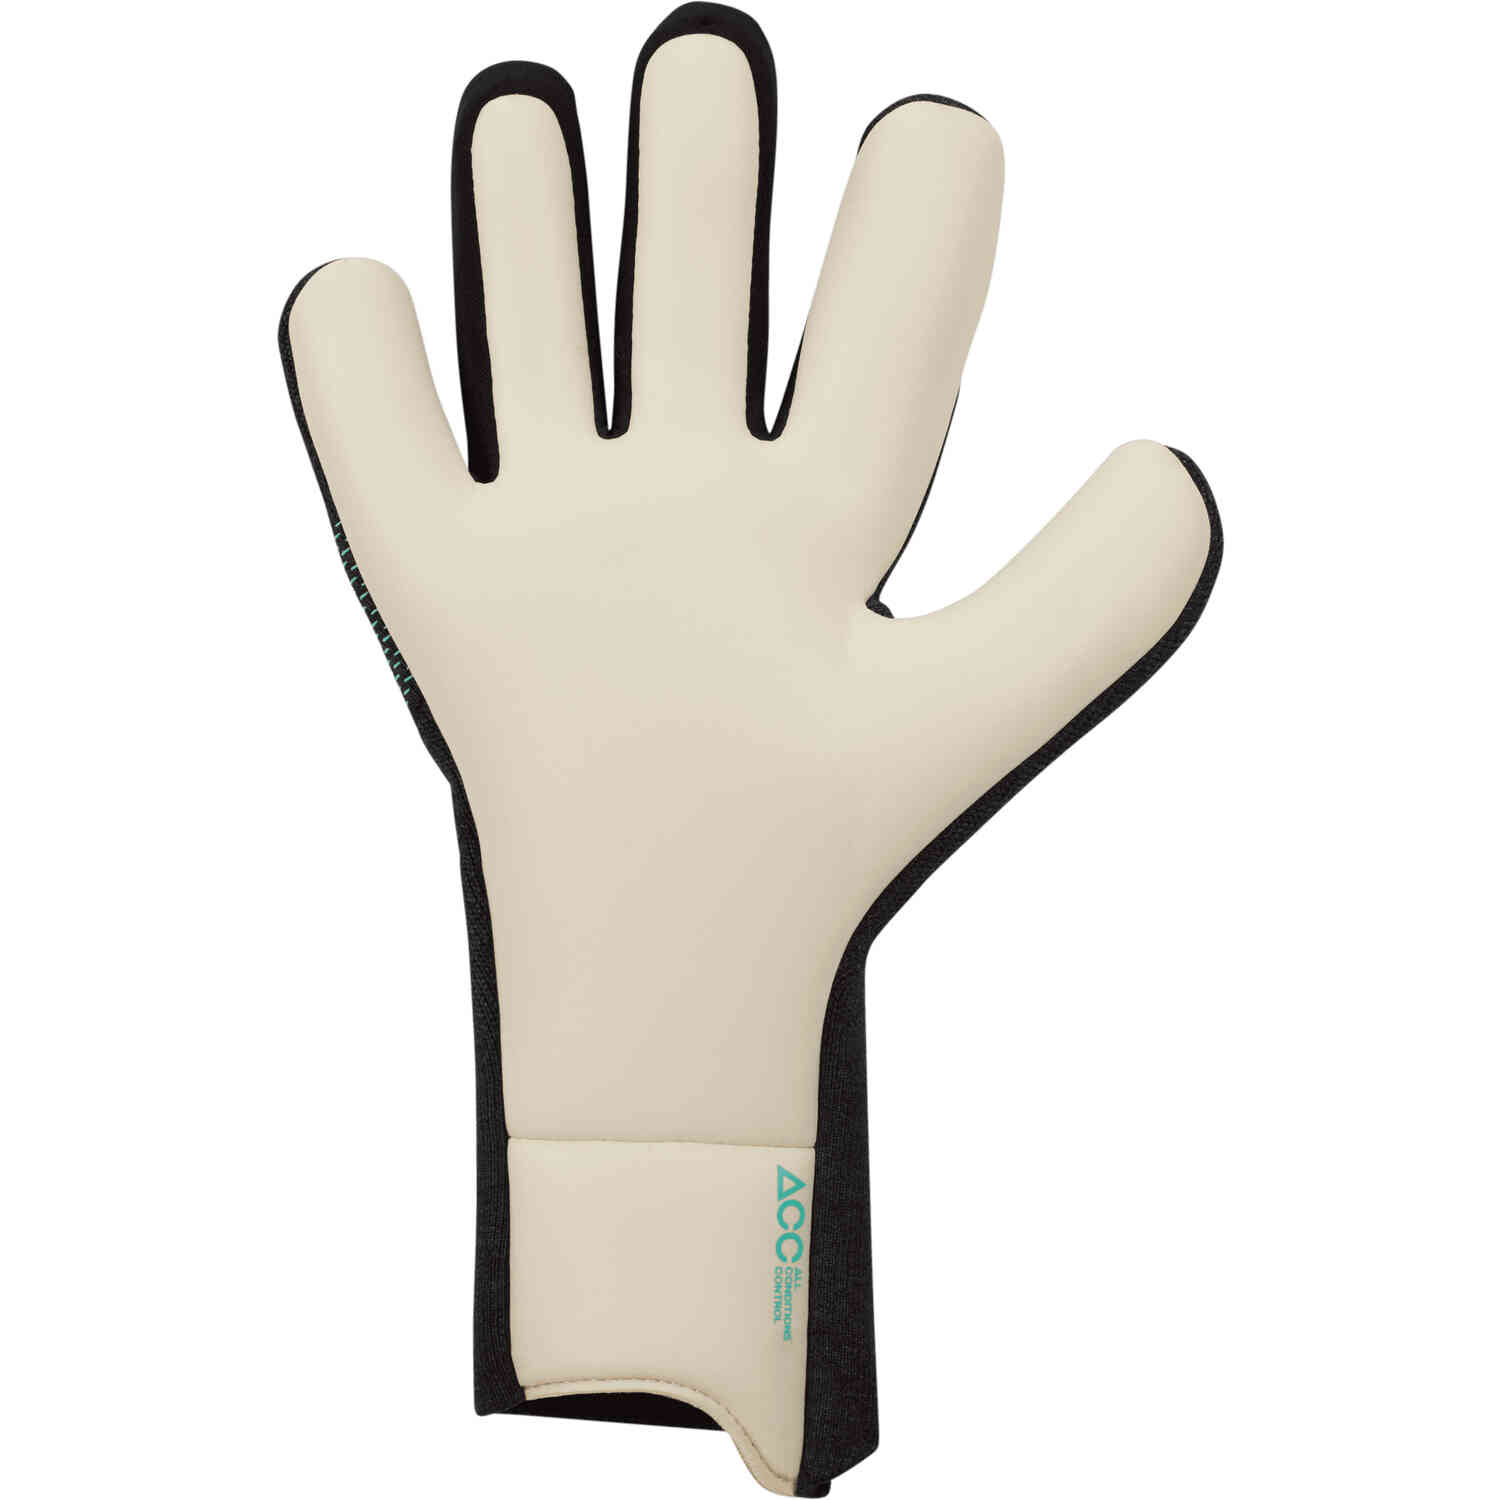 Nike Vapor Grip3 Goalkeeper Gloves - Black & Fuschia Dream with Hyper Turq.  - SoccerPro